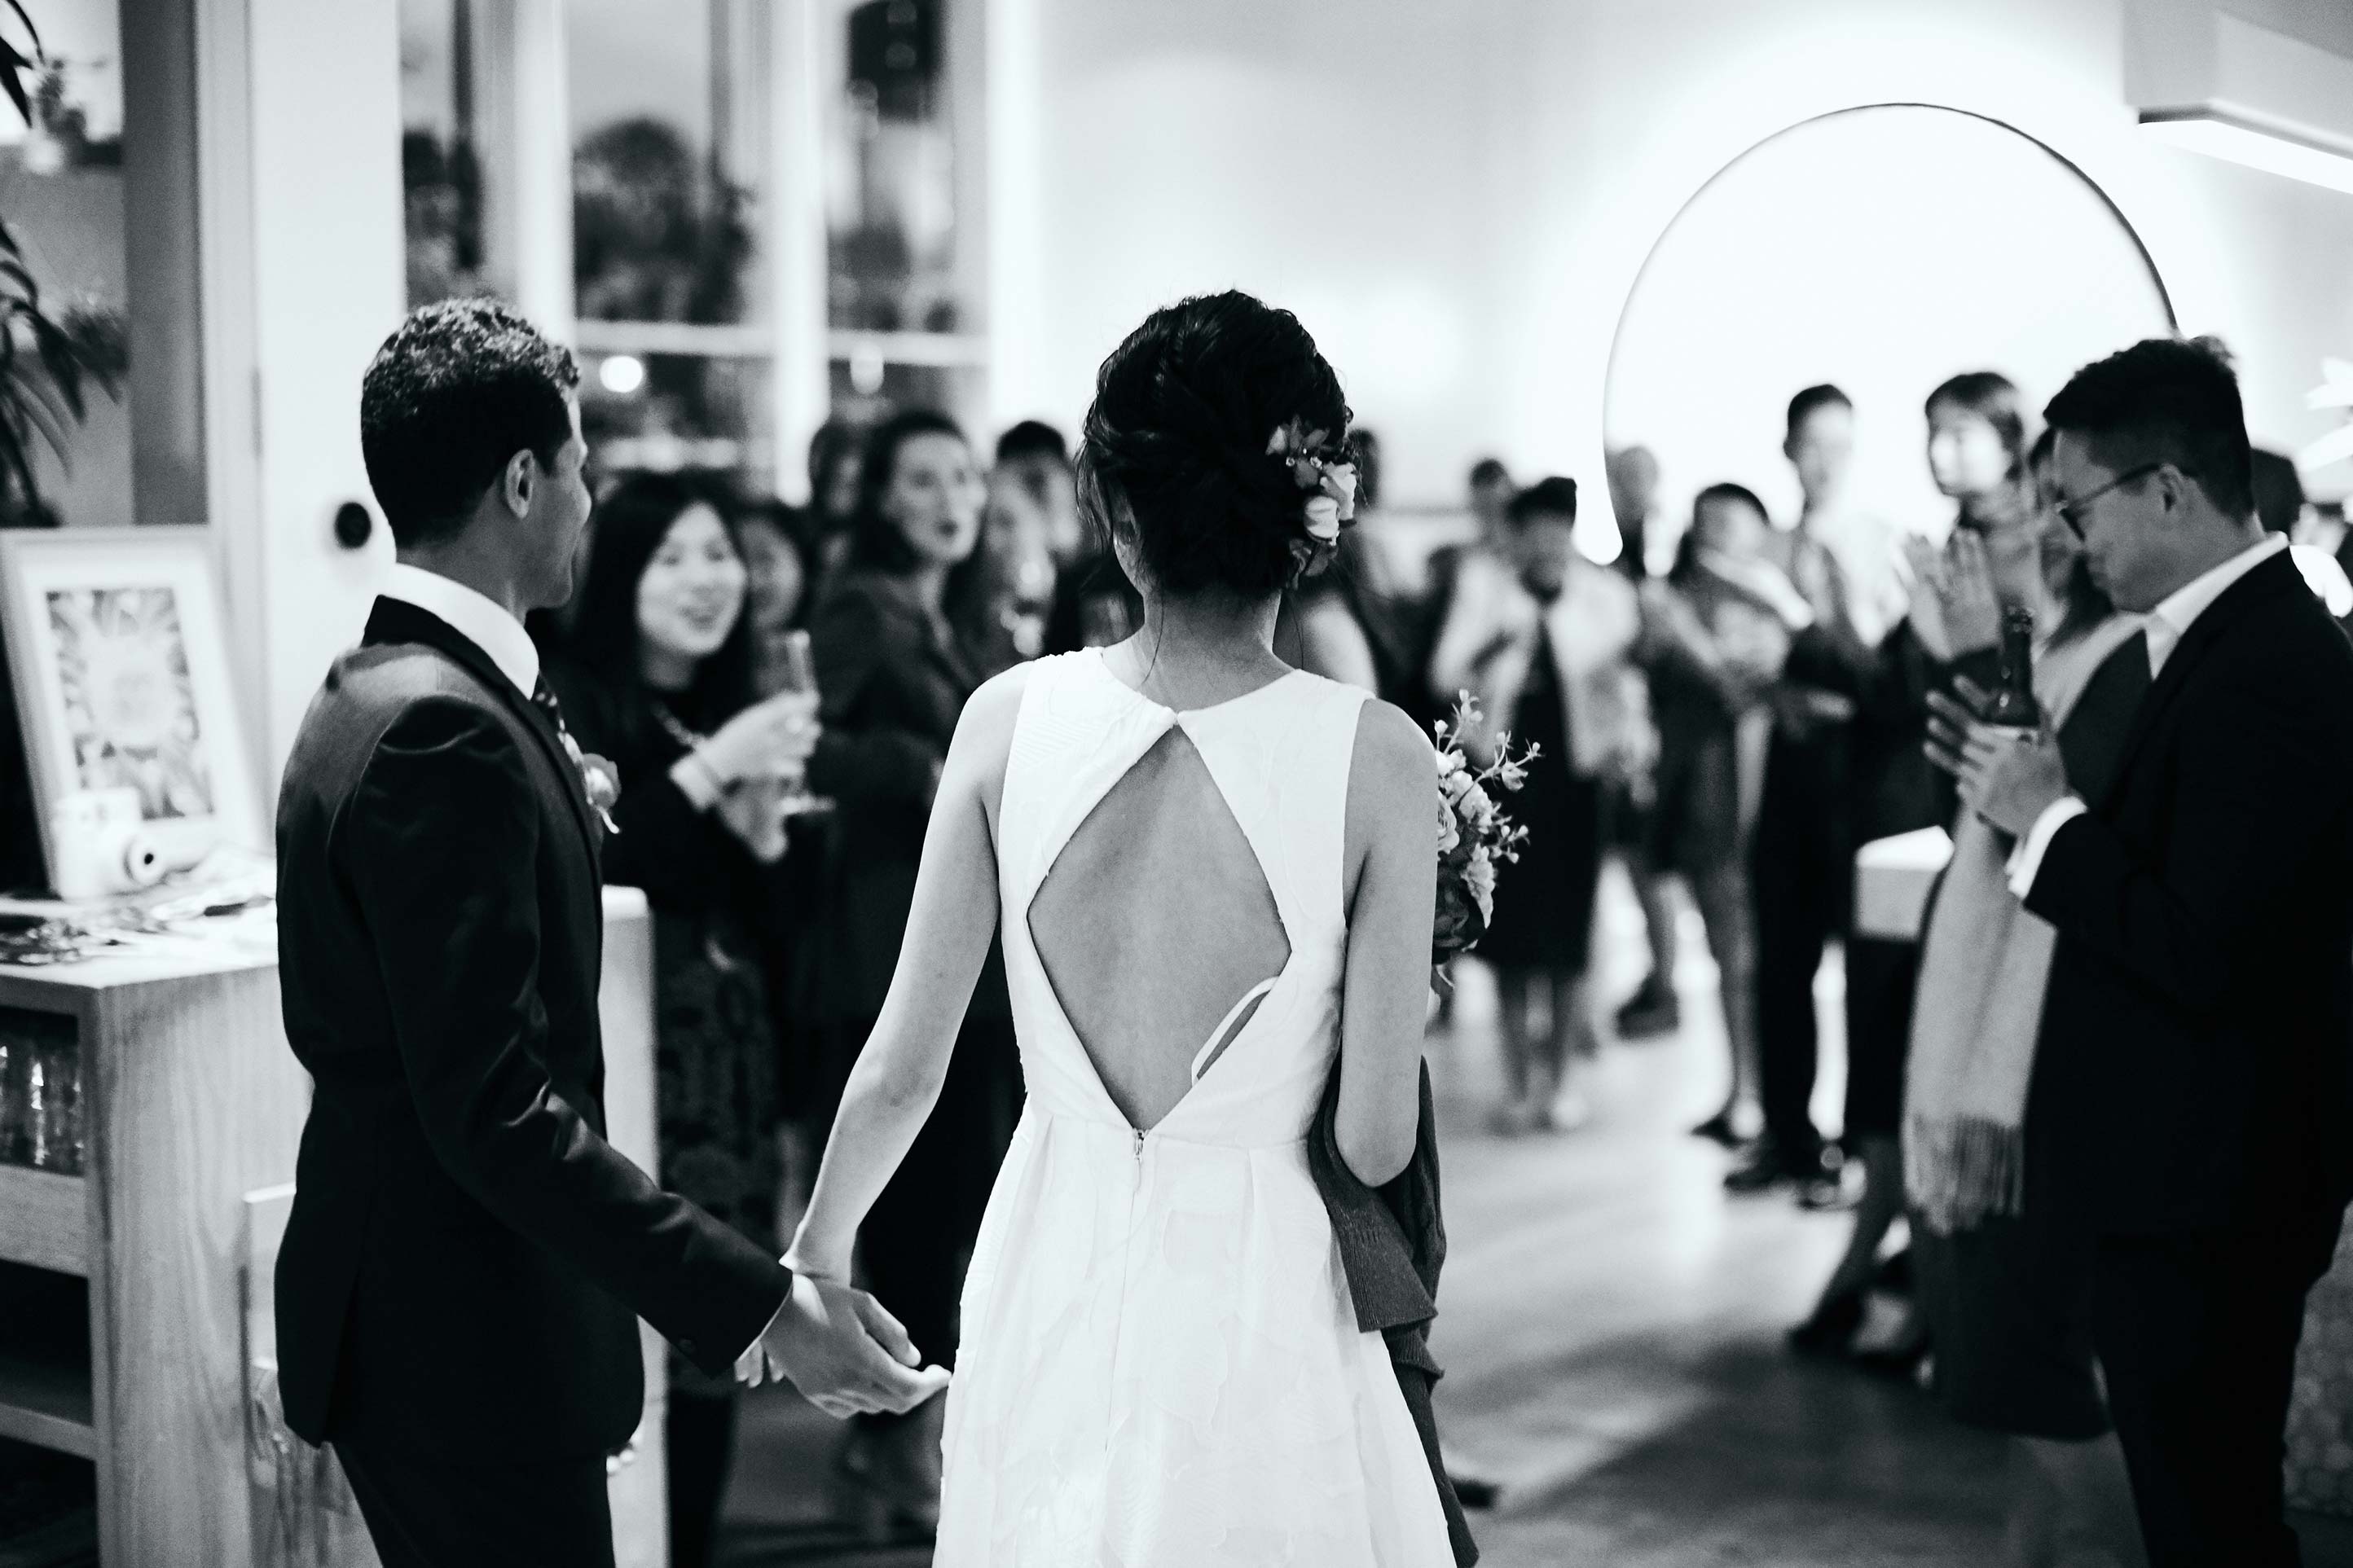 Melbourne-Wedding-Photographer-Kettle-Black-reception-entry